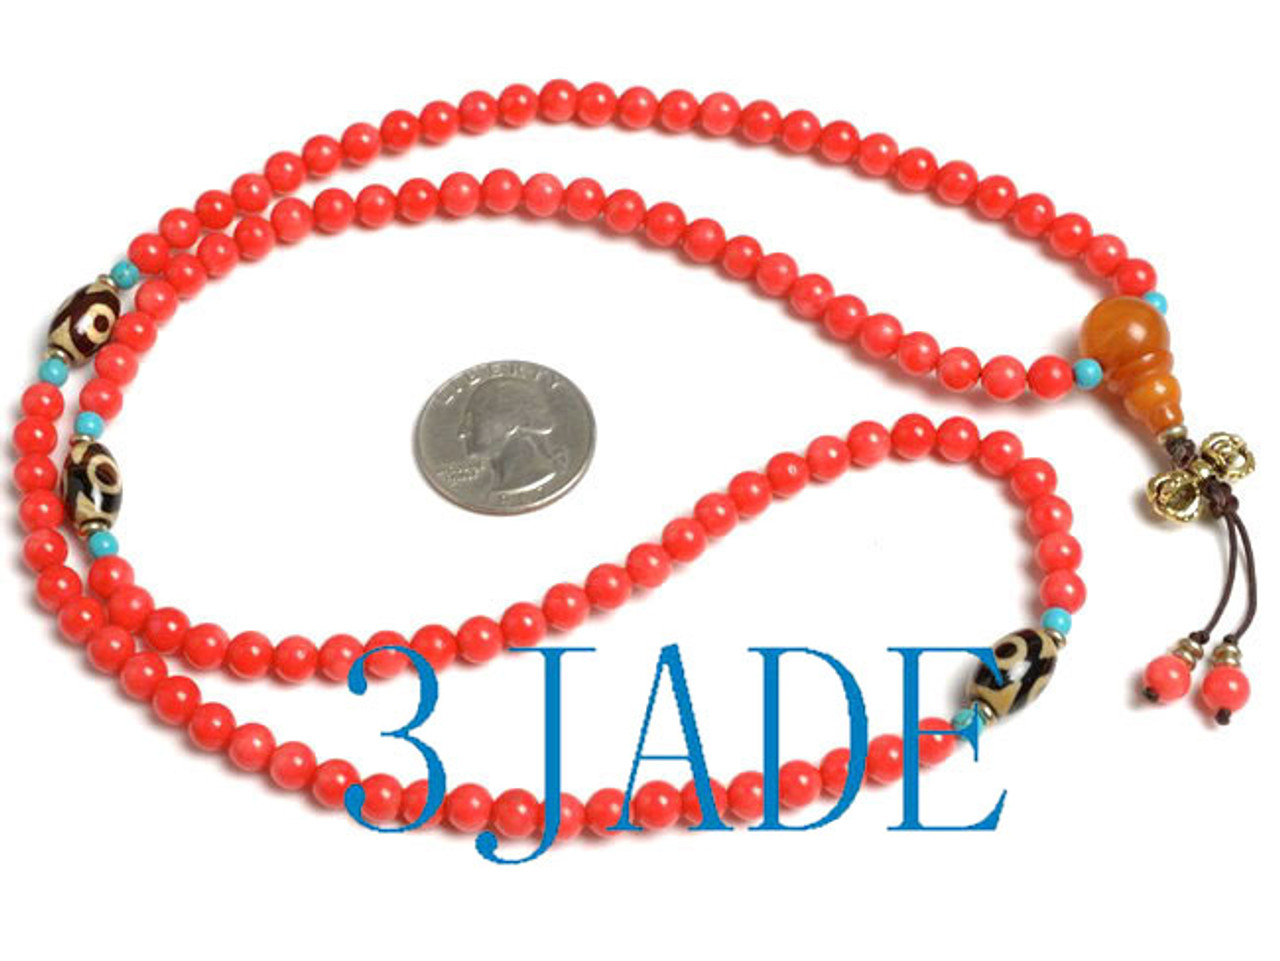 Tibetan Red Coral Mantra Meditation Buddhist Prayer Beads Mala E022010